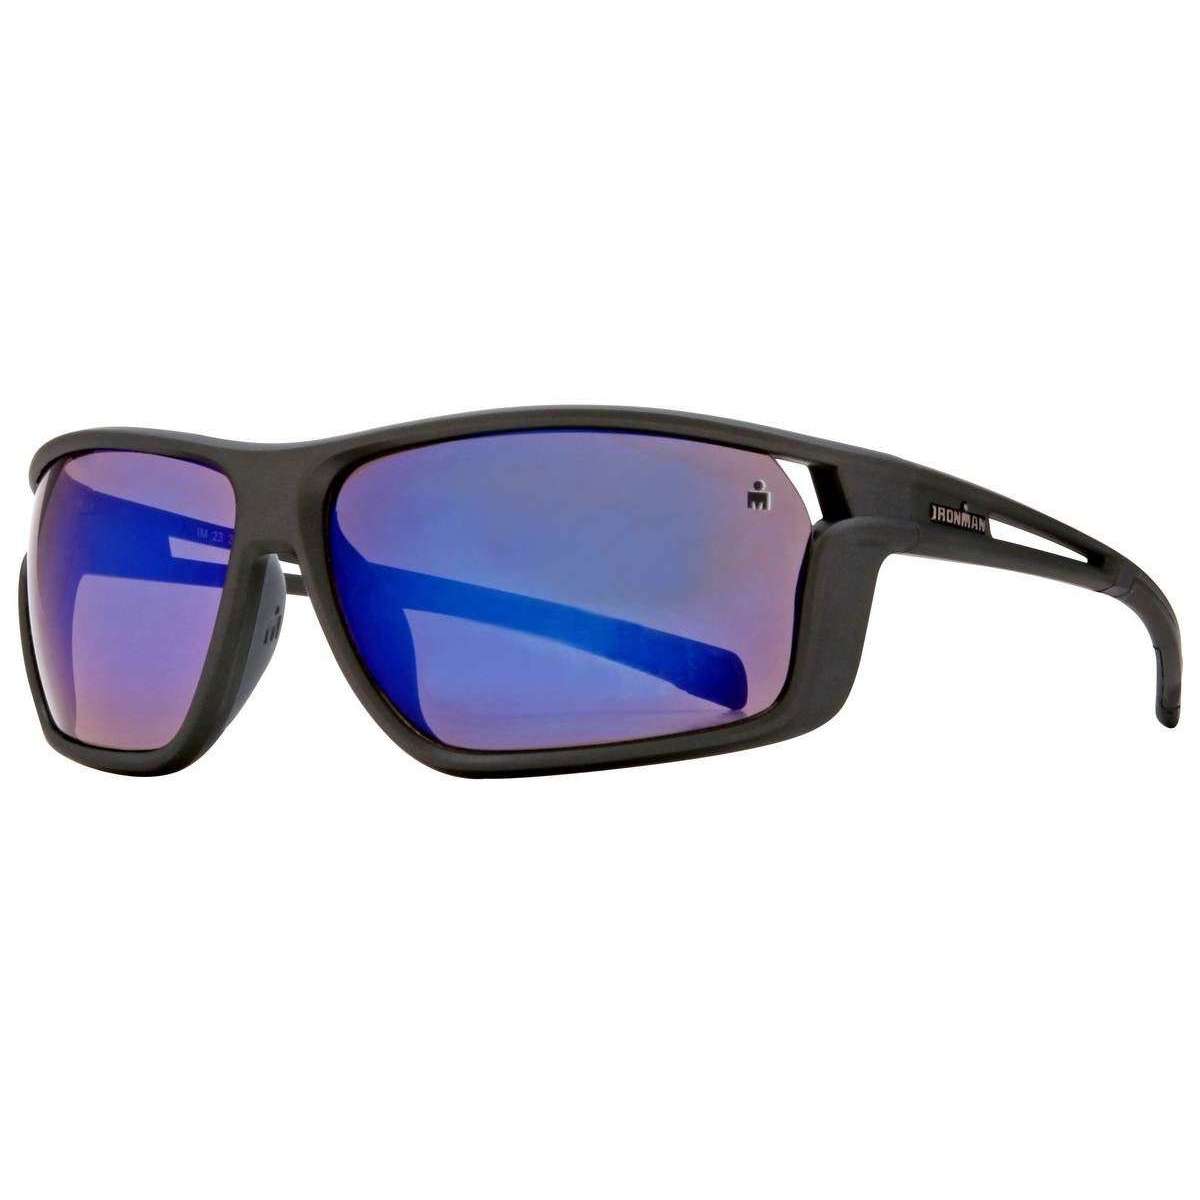 Iron Man Rivalry Sunglasses - Matte Grey/Black/Blue